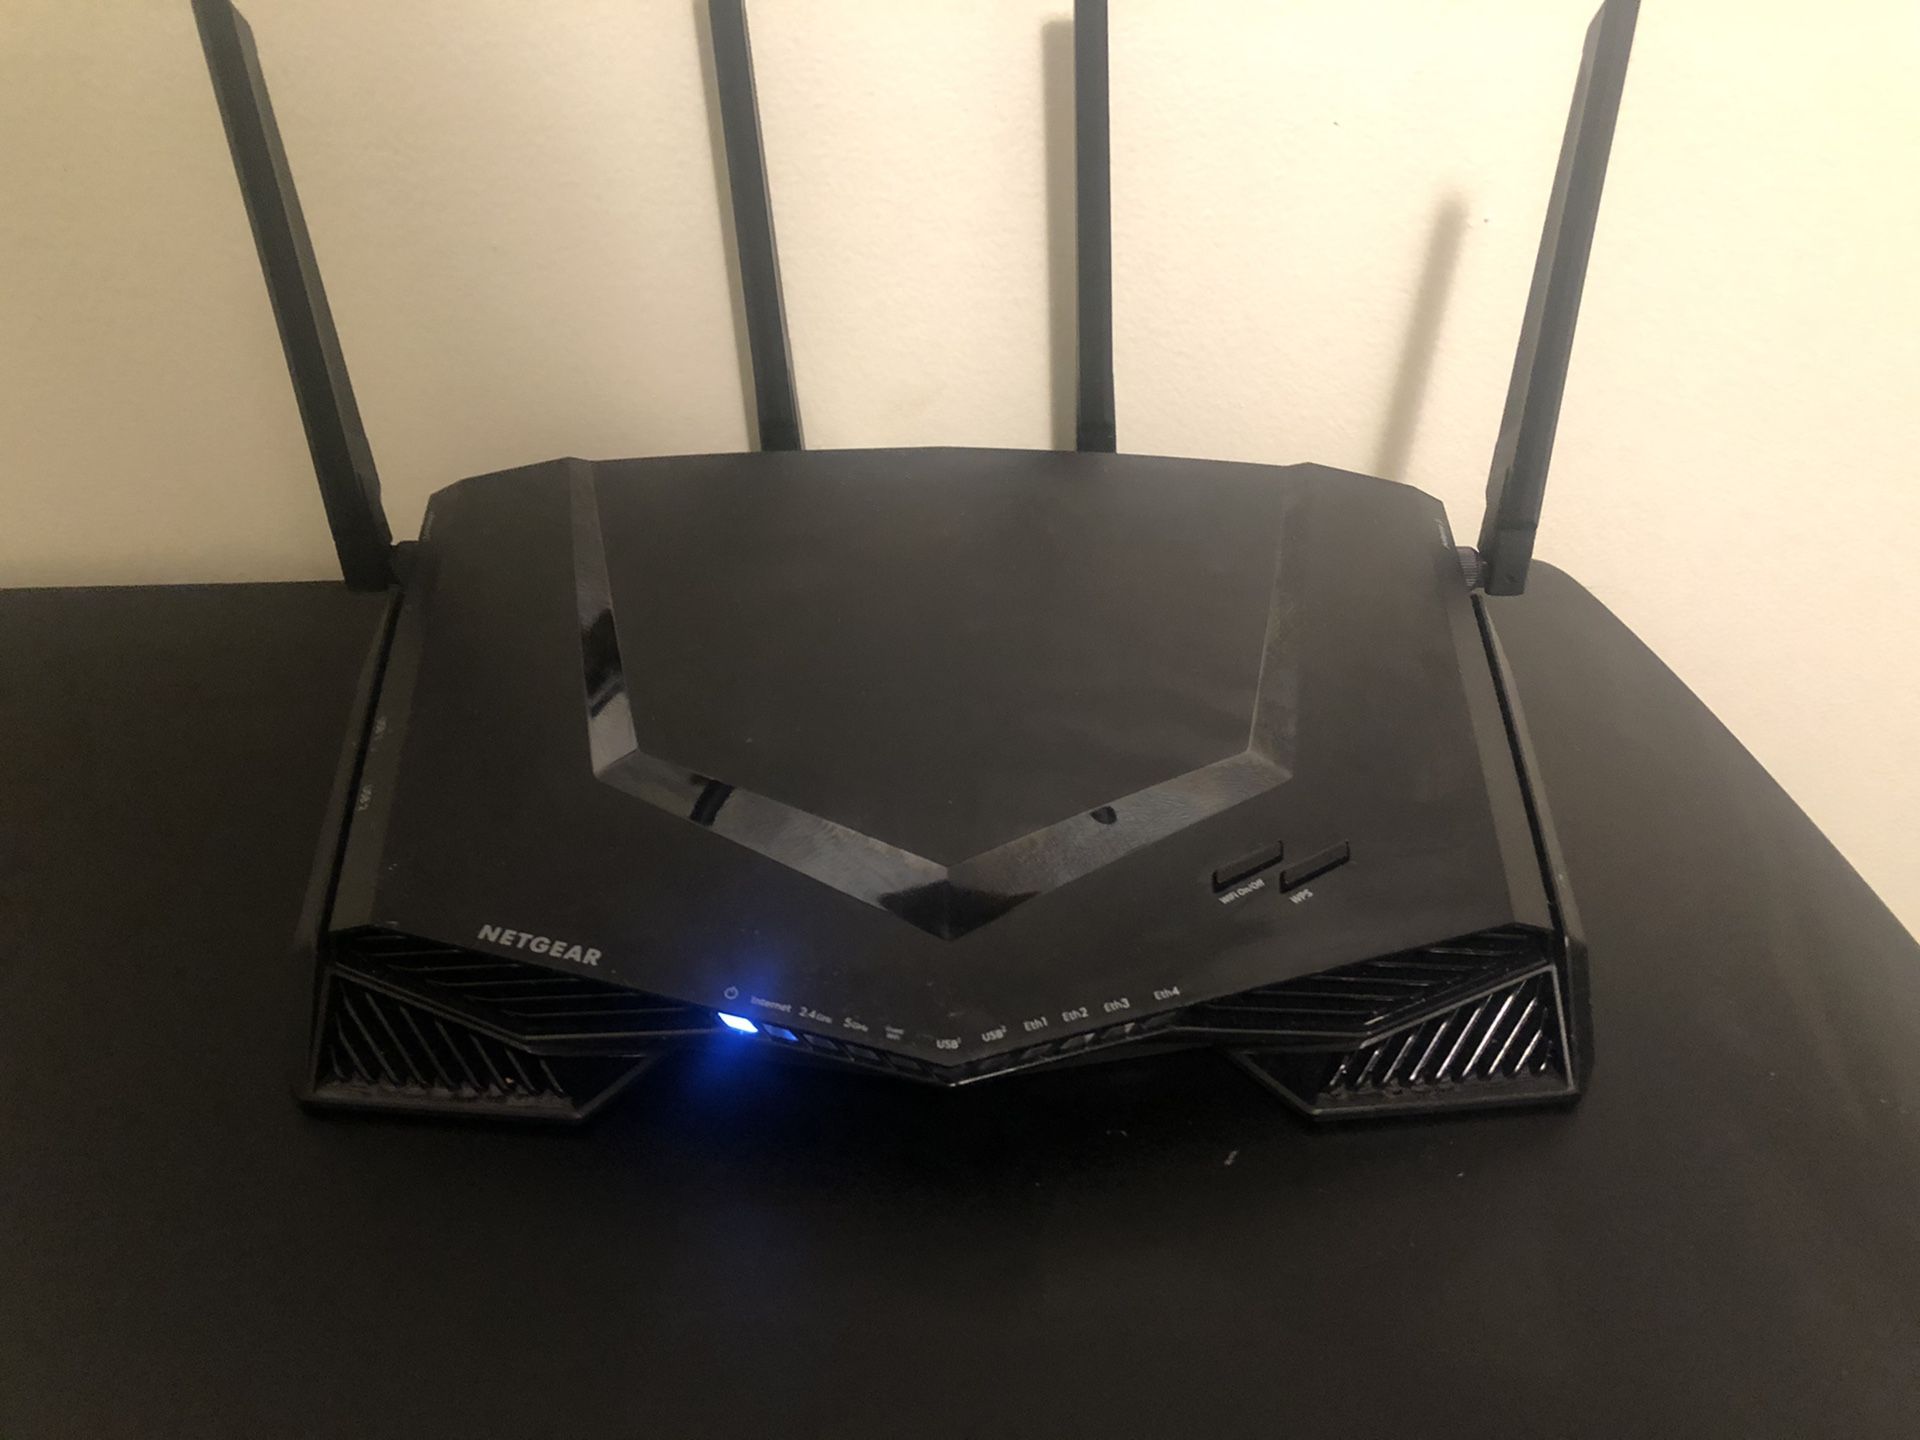 Netgear nighthawk gaming router